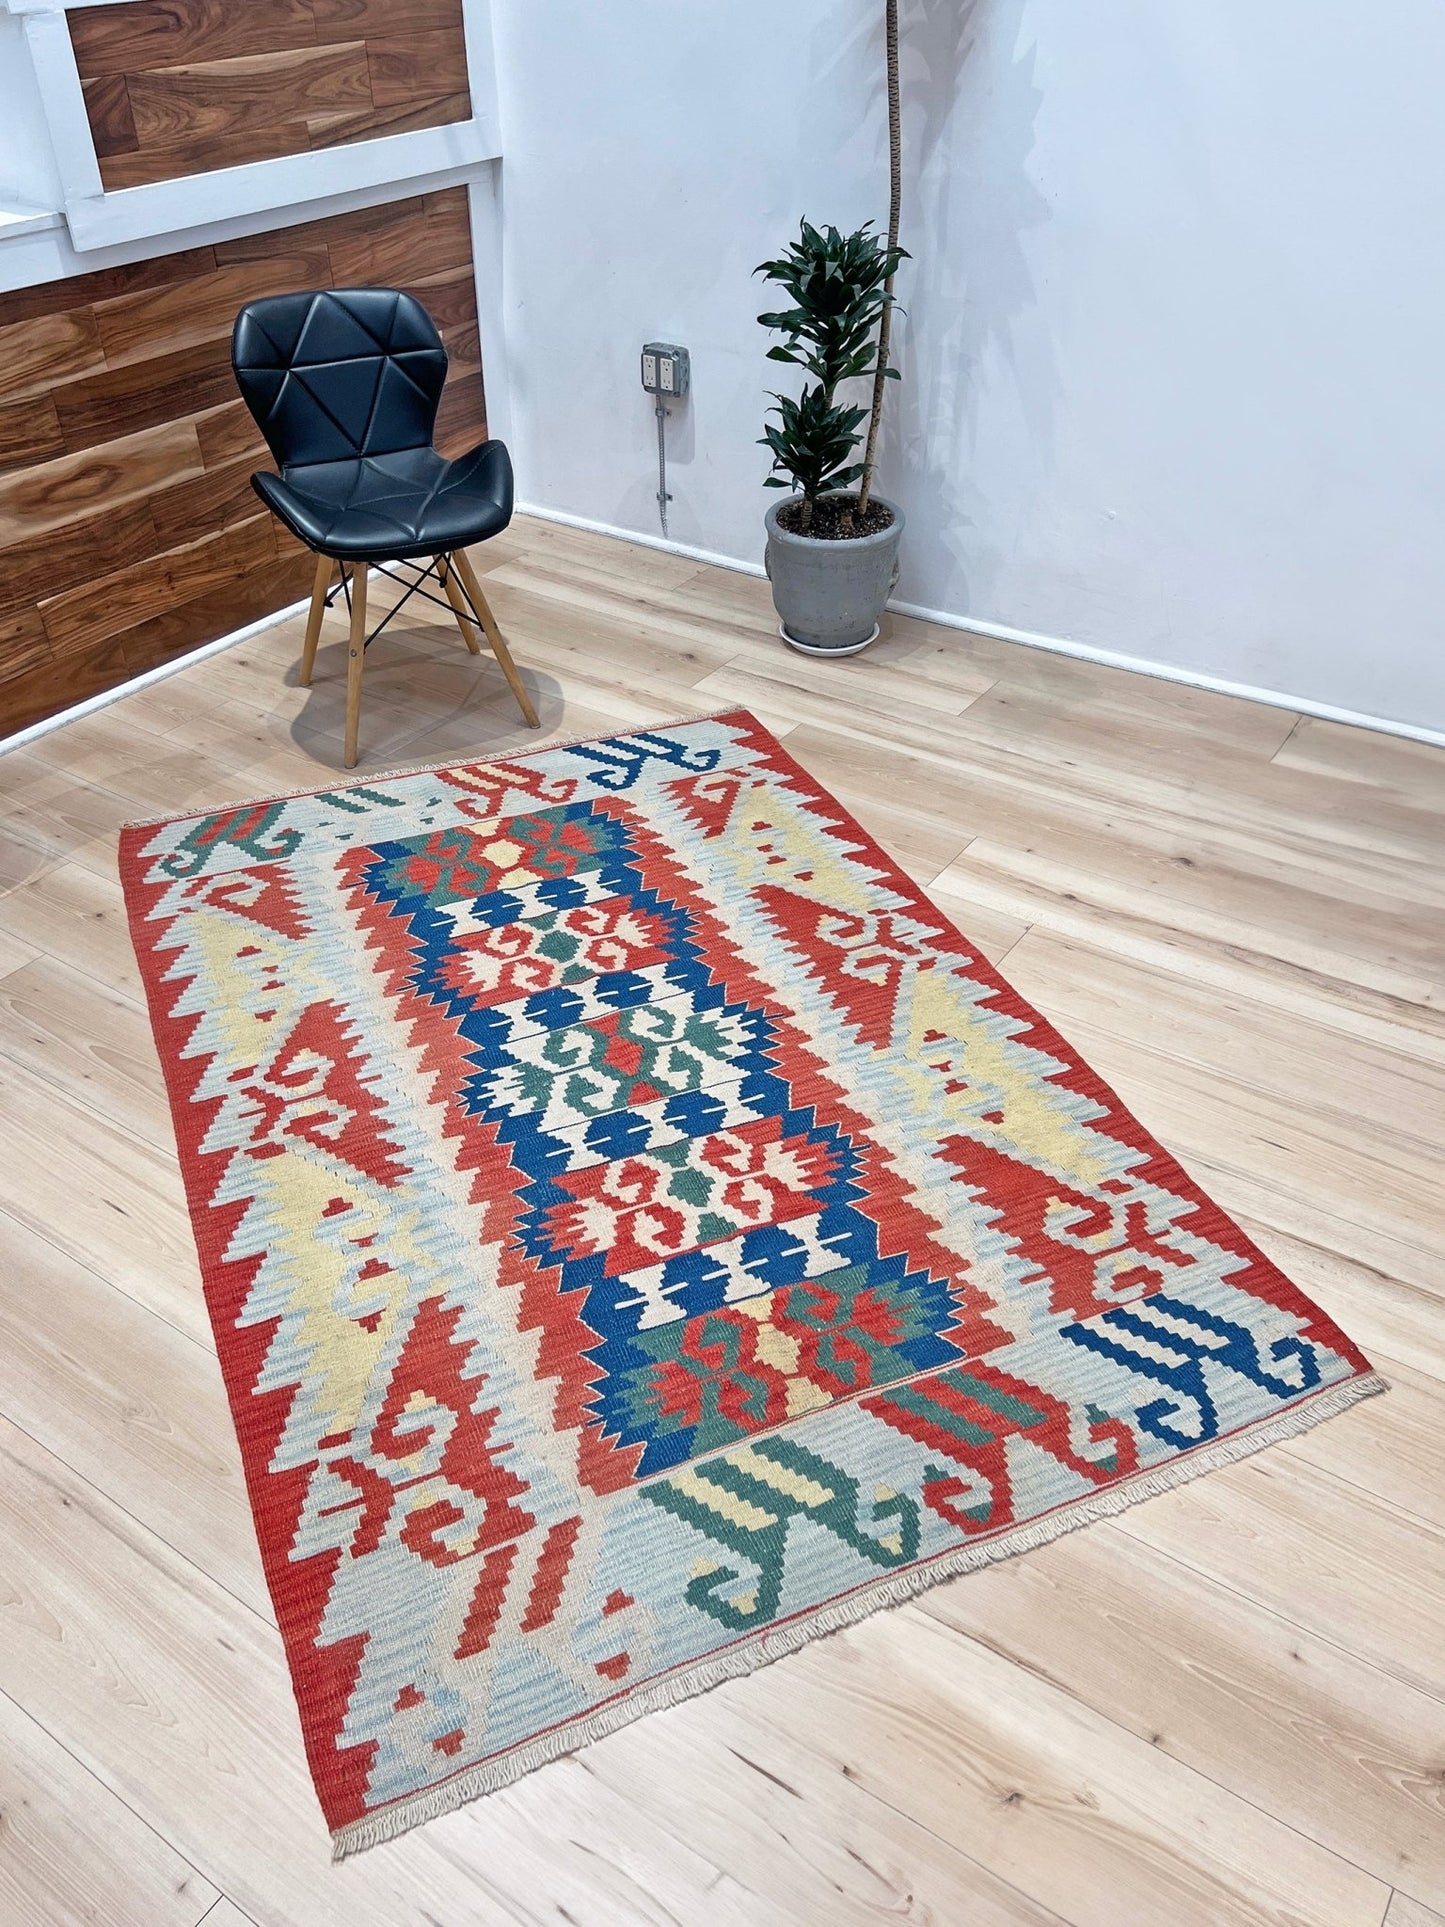 handmade turkish kilim rug shop san francisco bay area CA. Wool rug with tribal design.